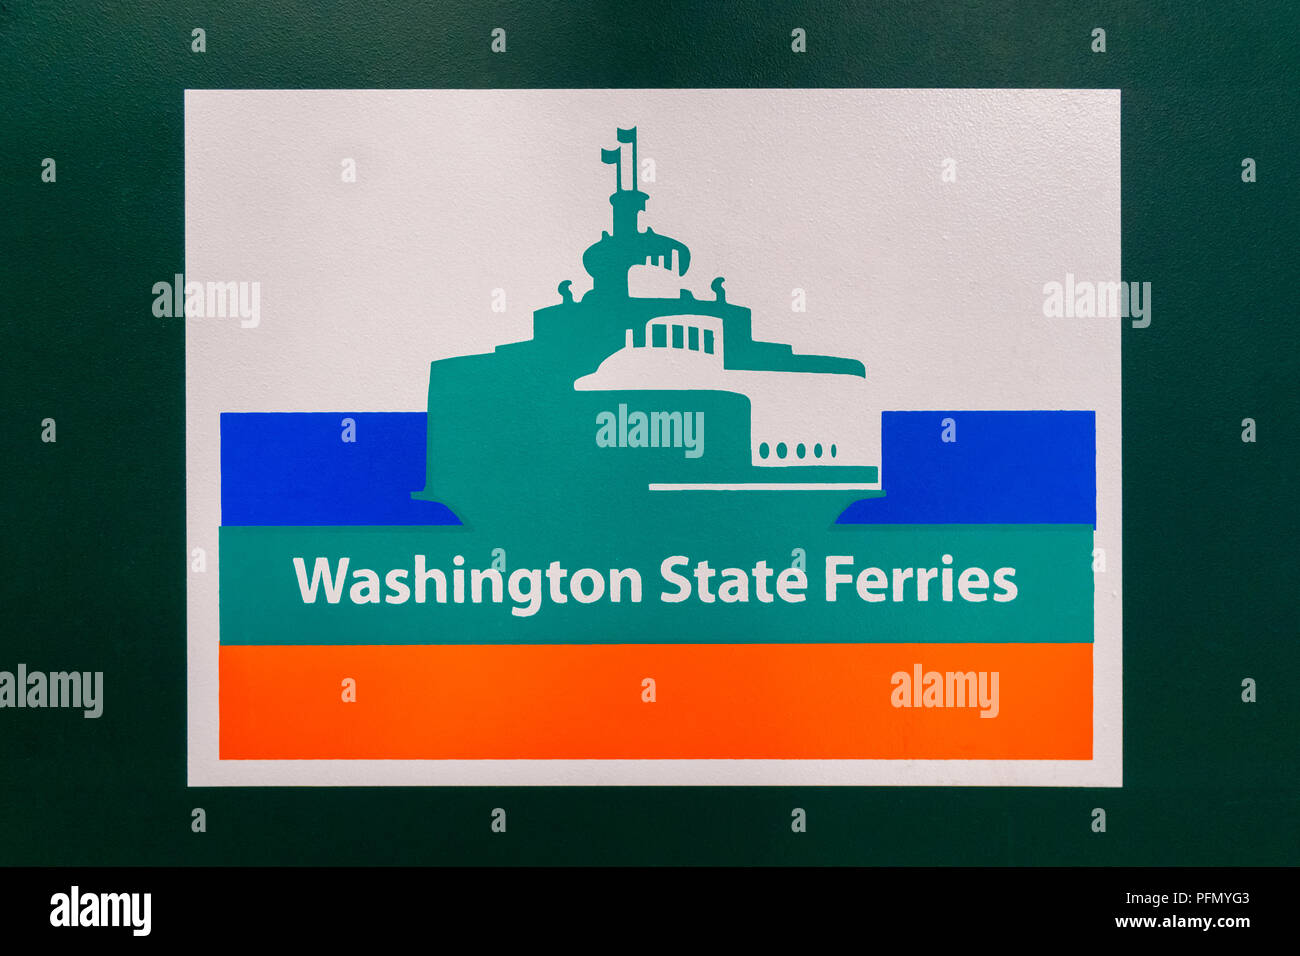 Washington State Ferries logotype or logo or design in the Bainbridge Island terminal, USA. Stock Photo